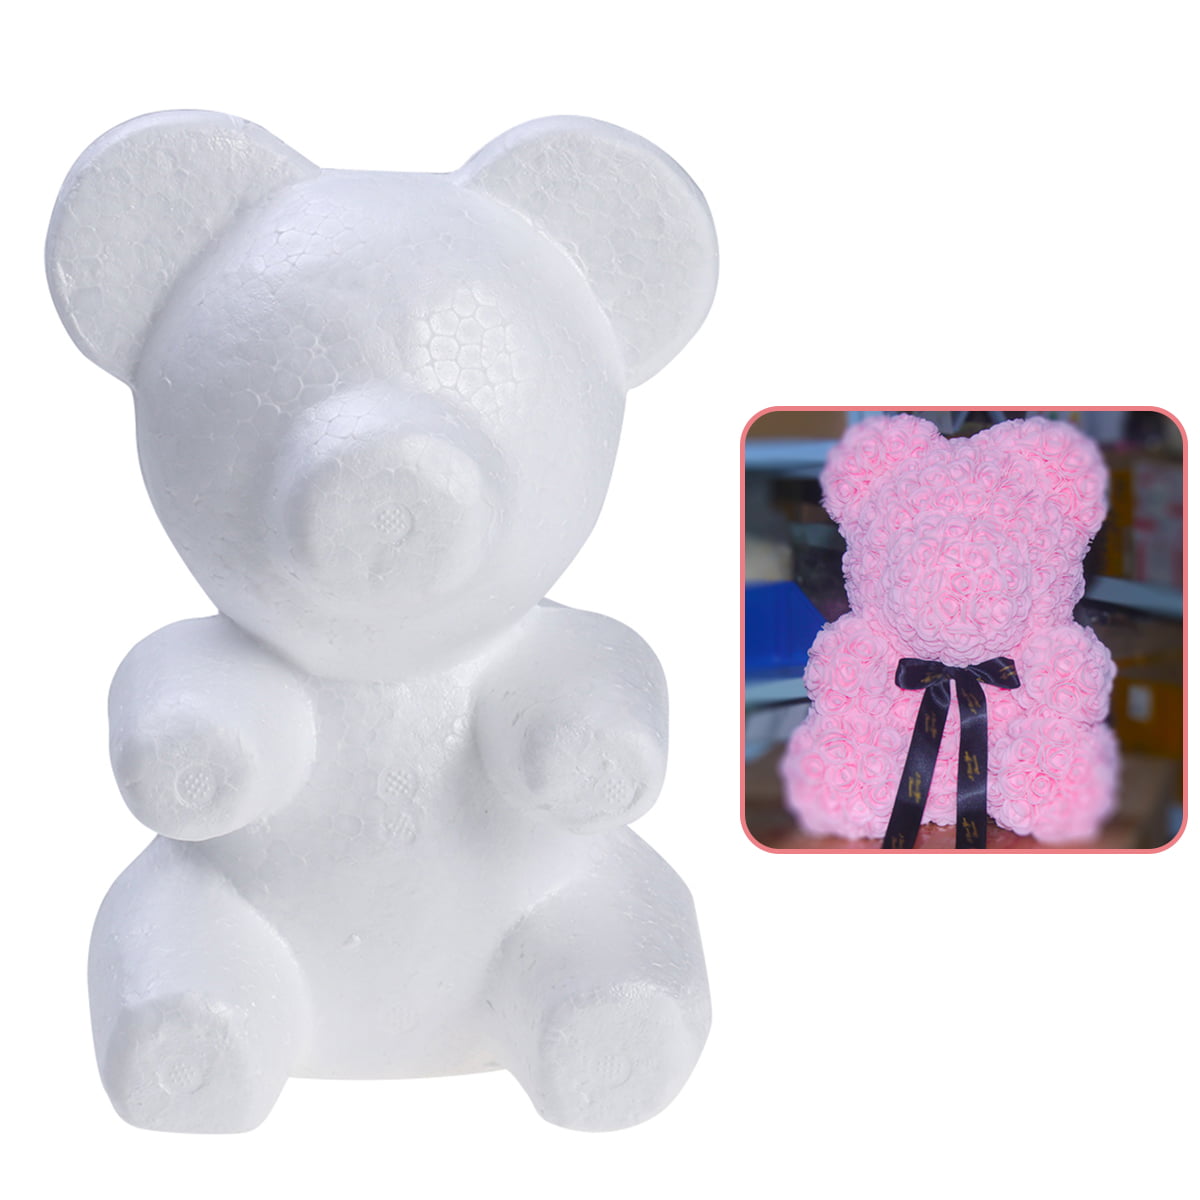 ×12 20 cm Modeling Polystyrene Styrofoam White Foam Bear Crafts DIY Gifts uk